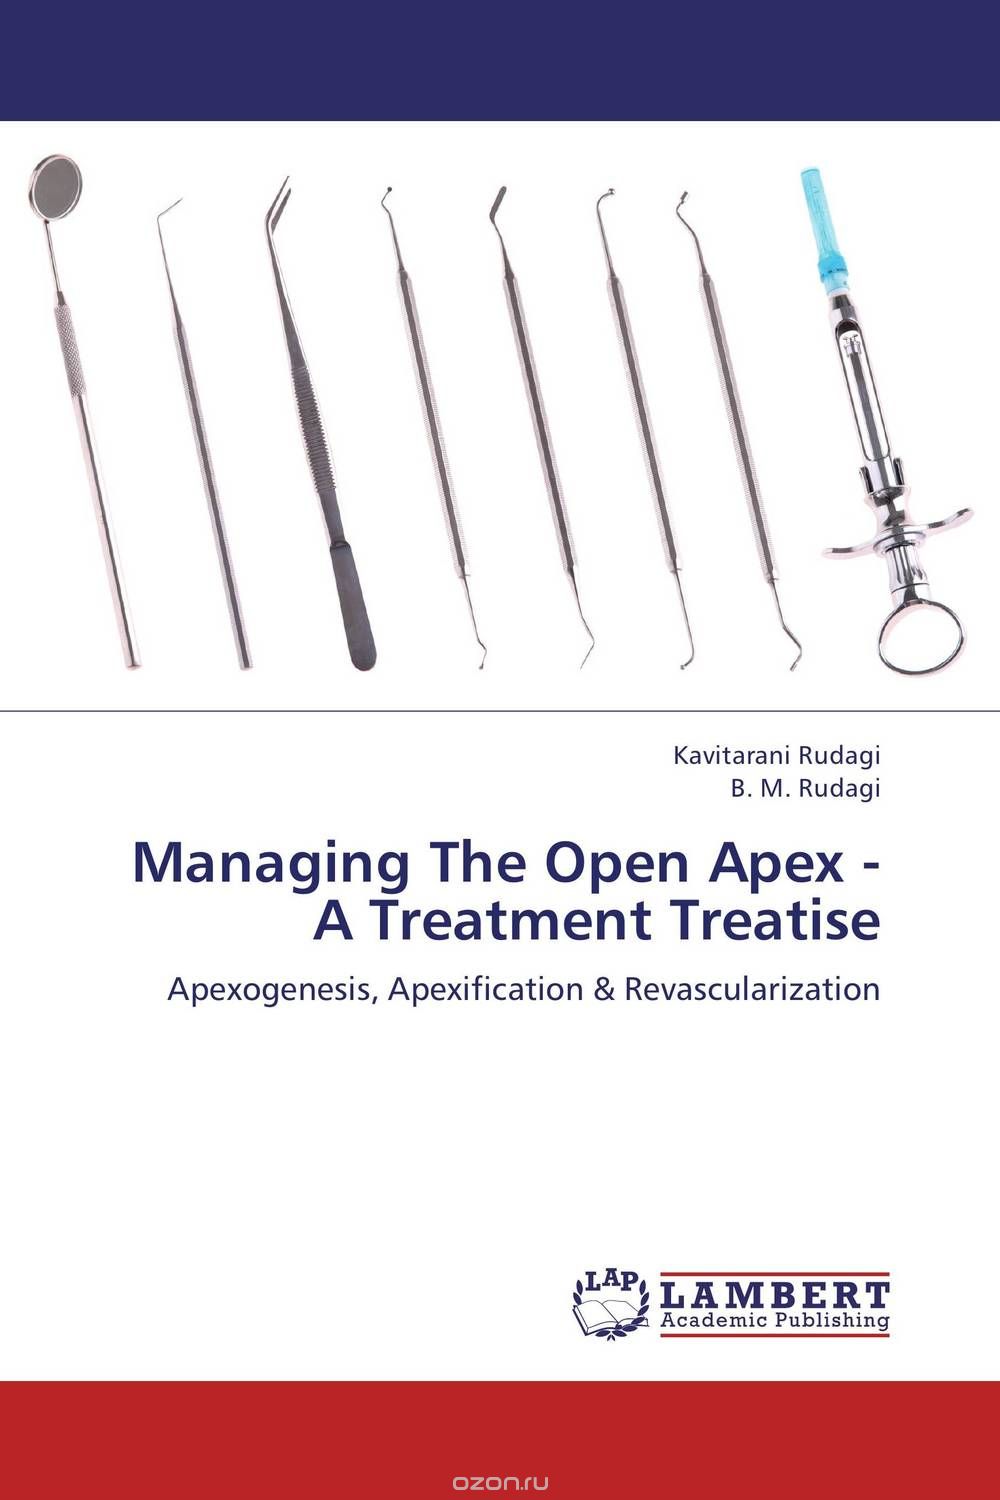 Скачать книгу "Managing The Open Apex - A Treatment Treatise"